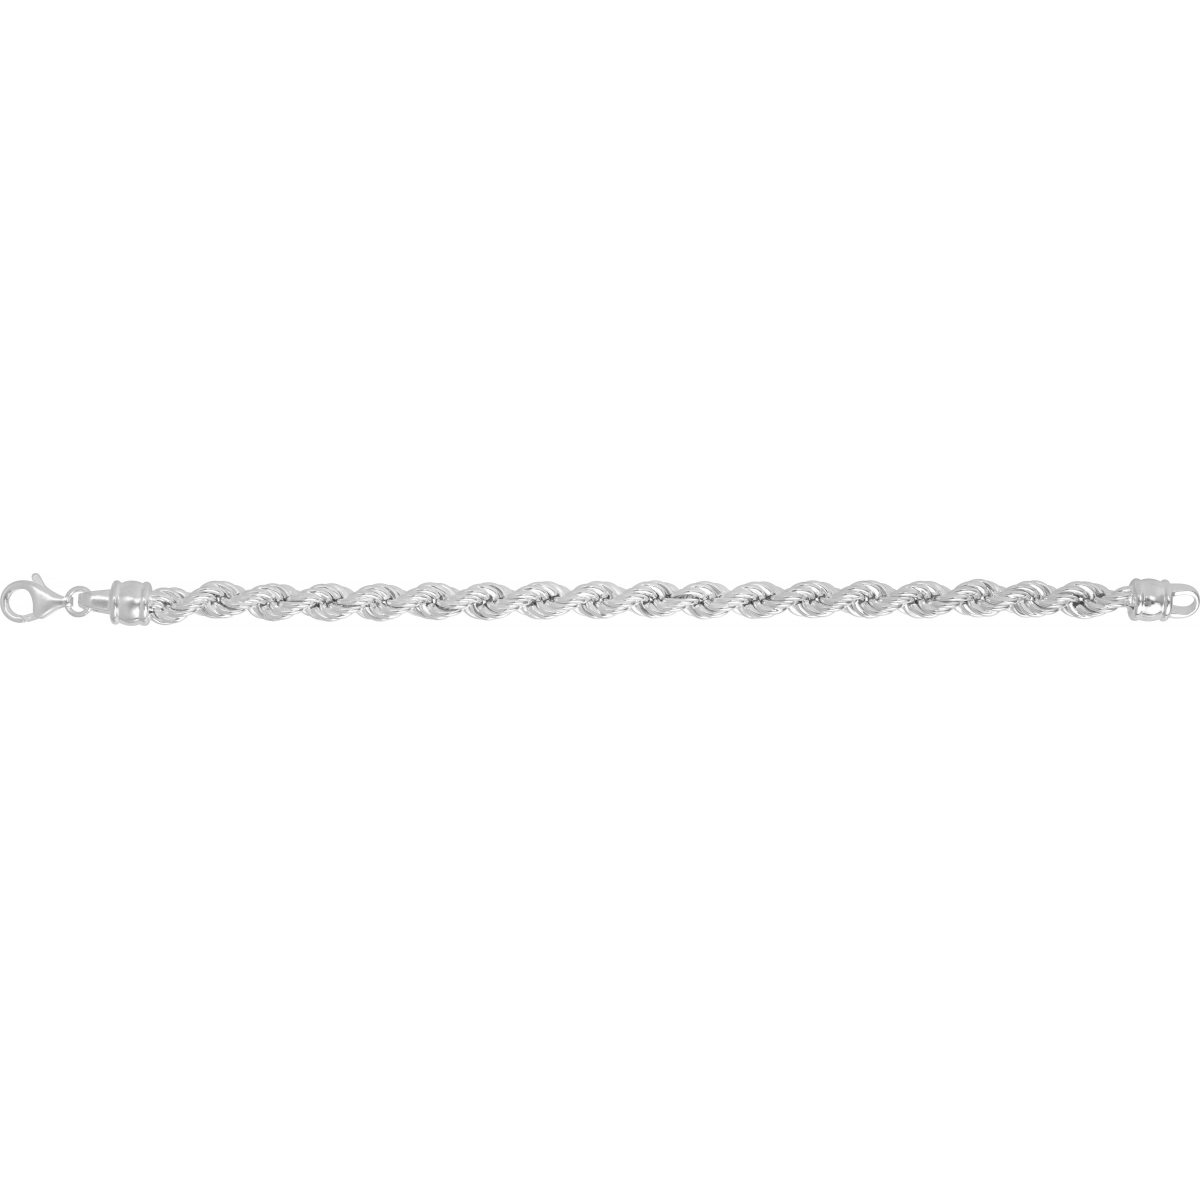 Bracelet rh925 Silver - Size: 19  Lua Blanca  331092B.19